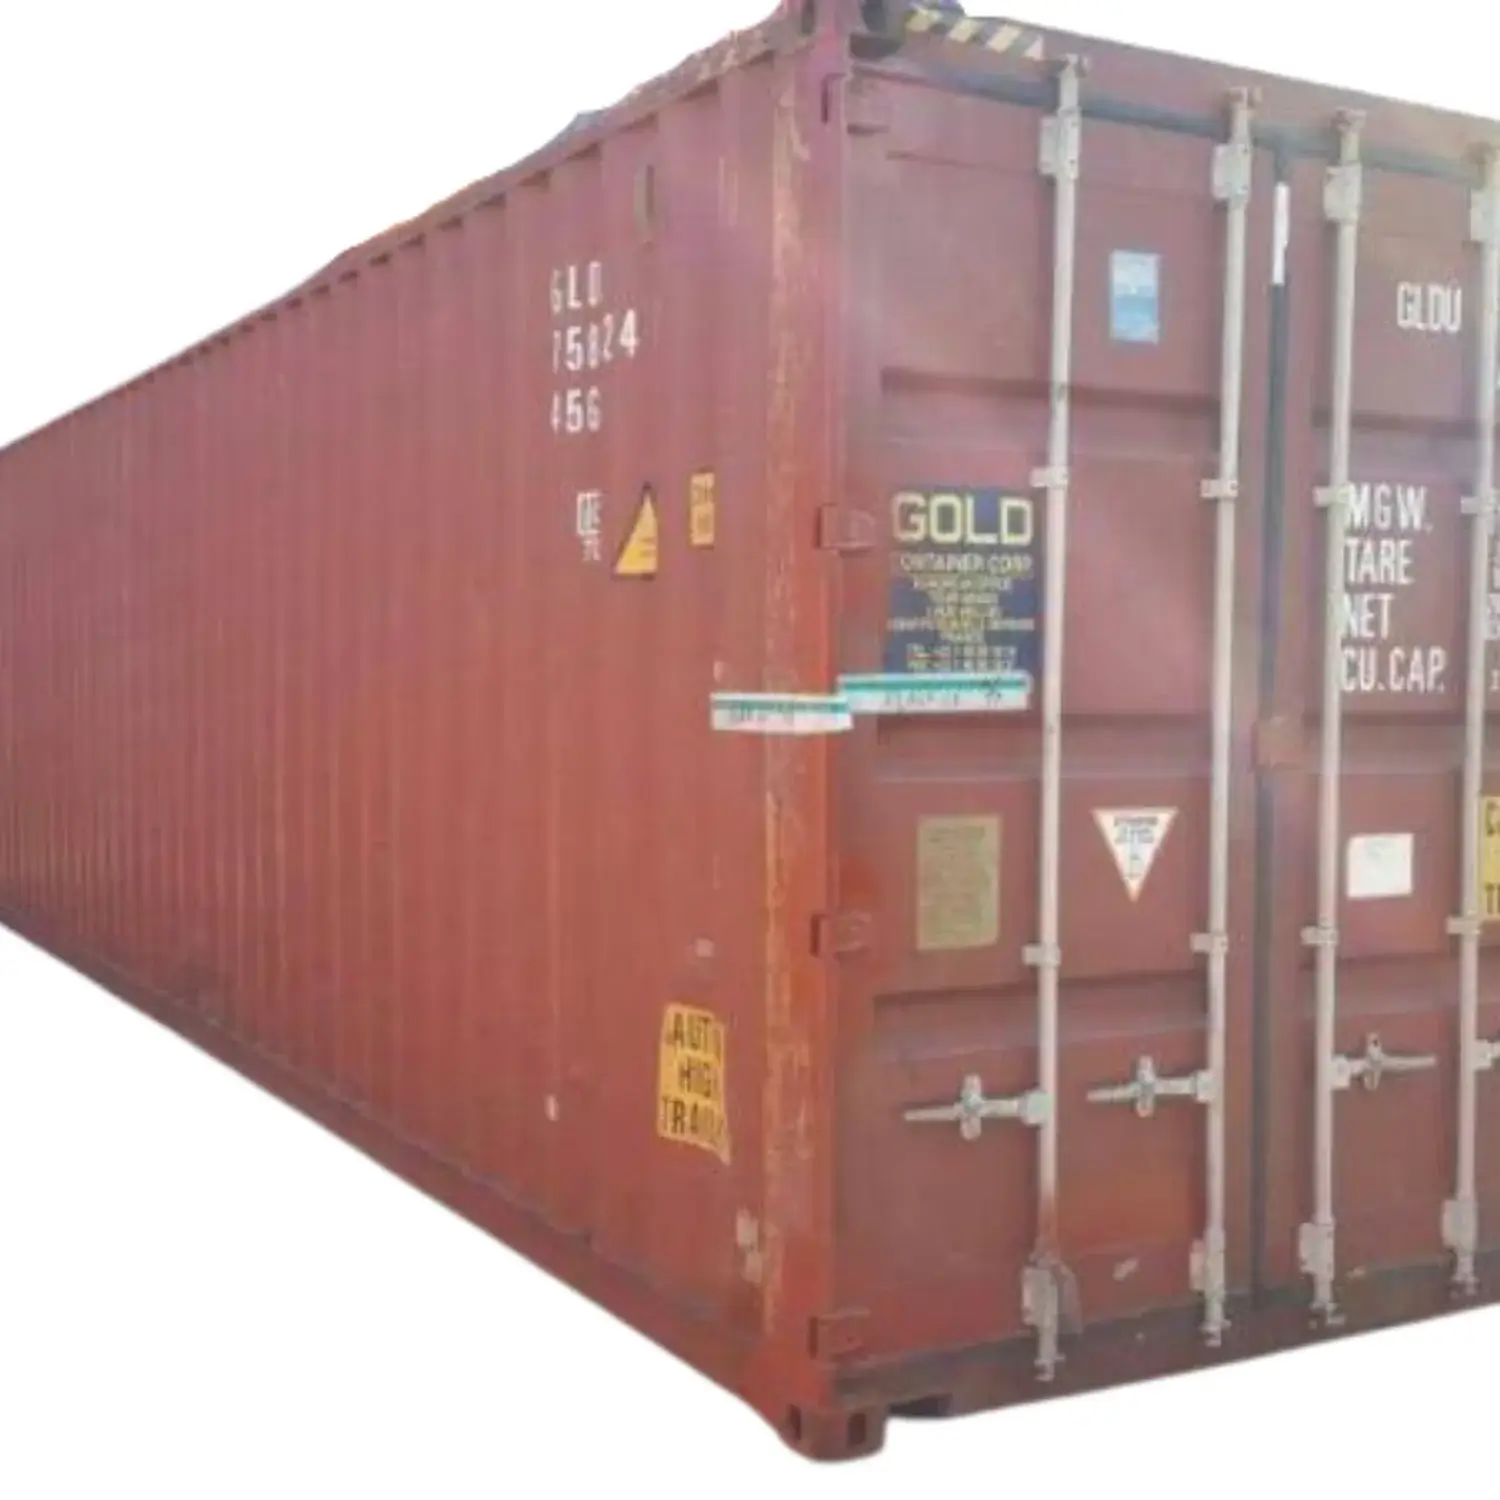 Storage Containers For Sale Columbus Ohio